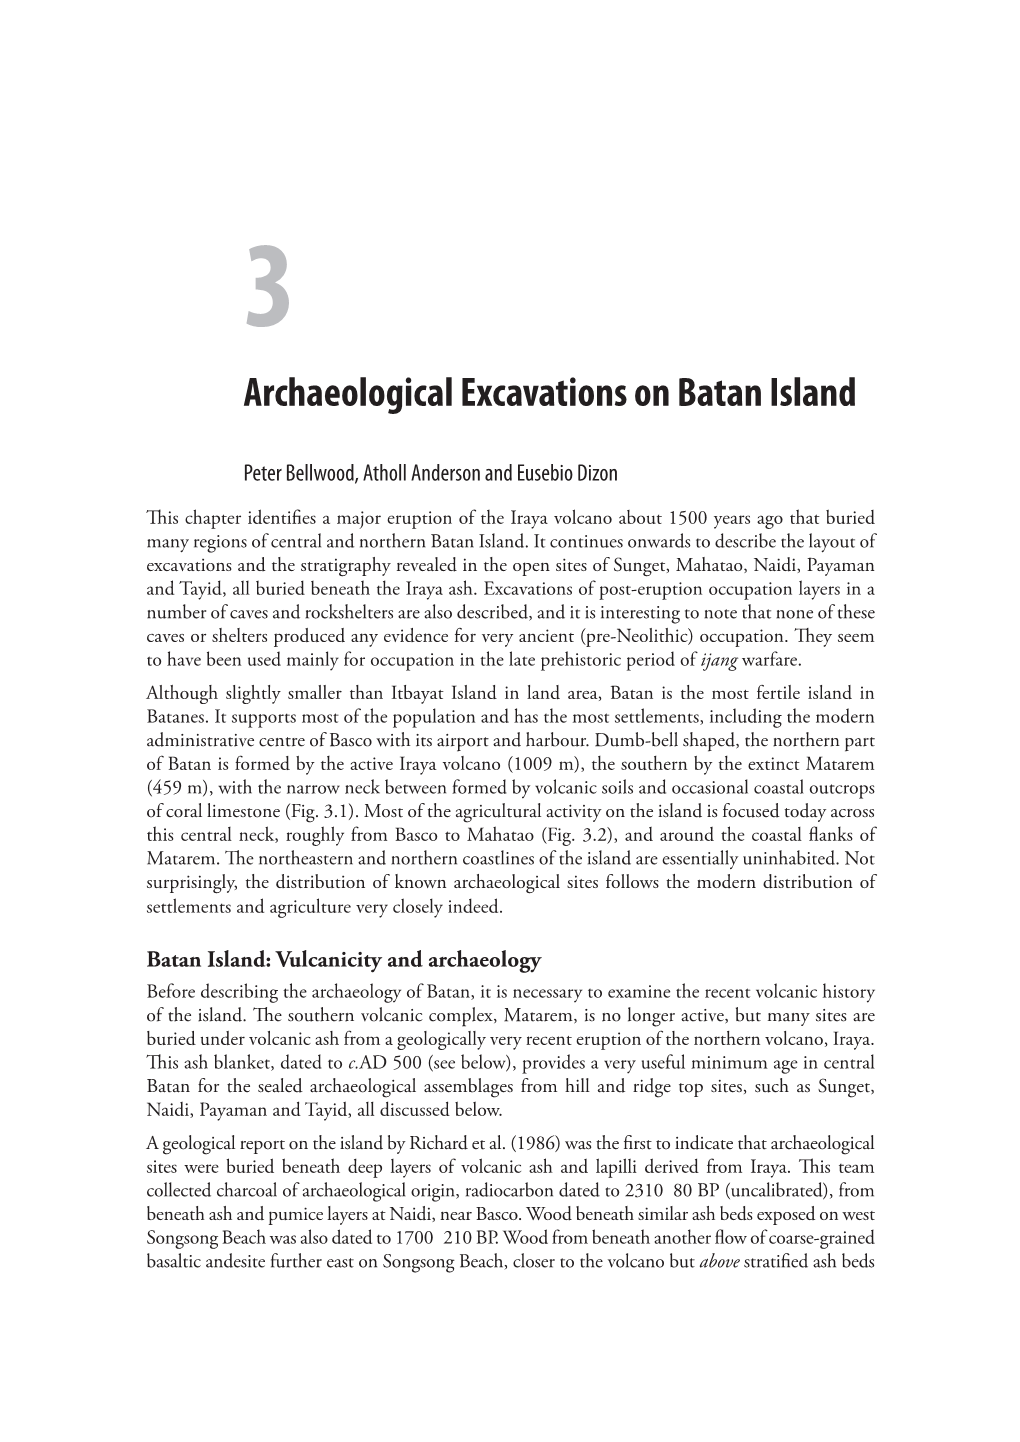 Archaeological Excavations on Batan Island